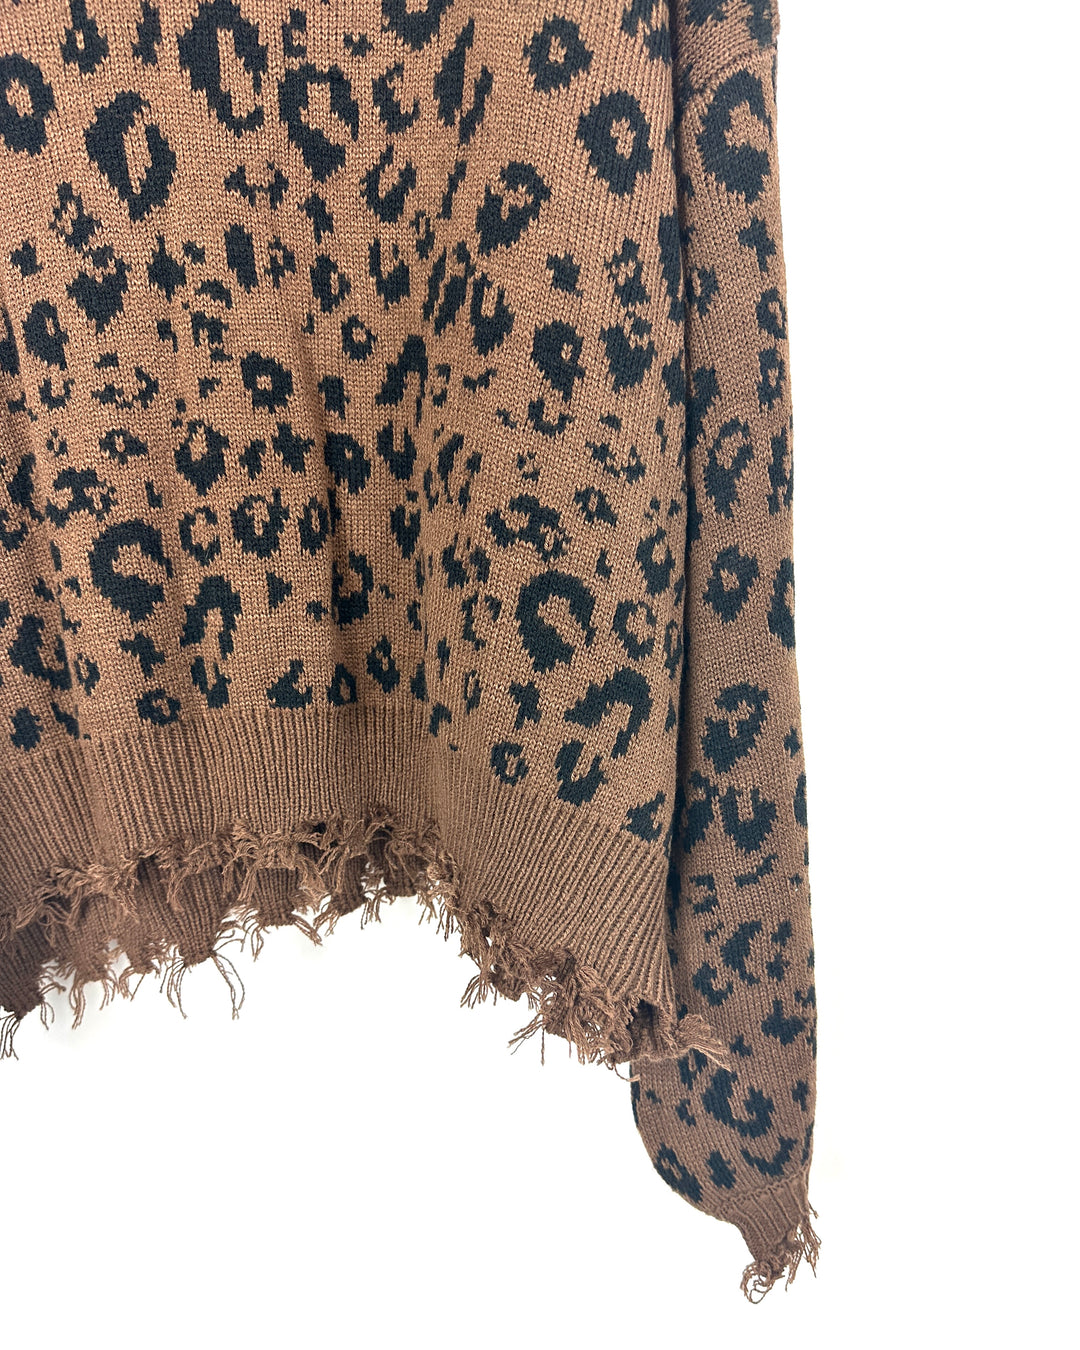 Brown Cheetah Print Knit Sweater - 2X